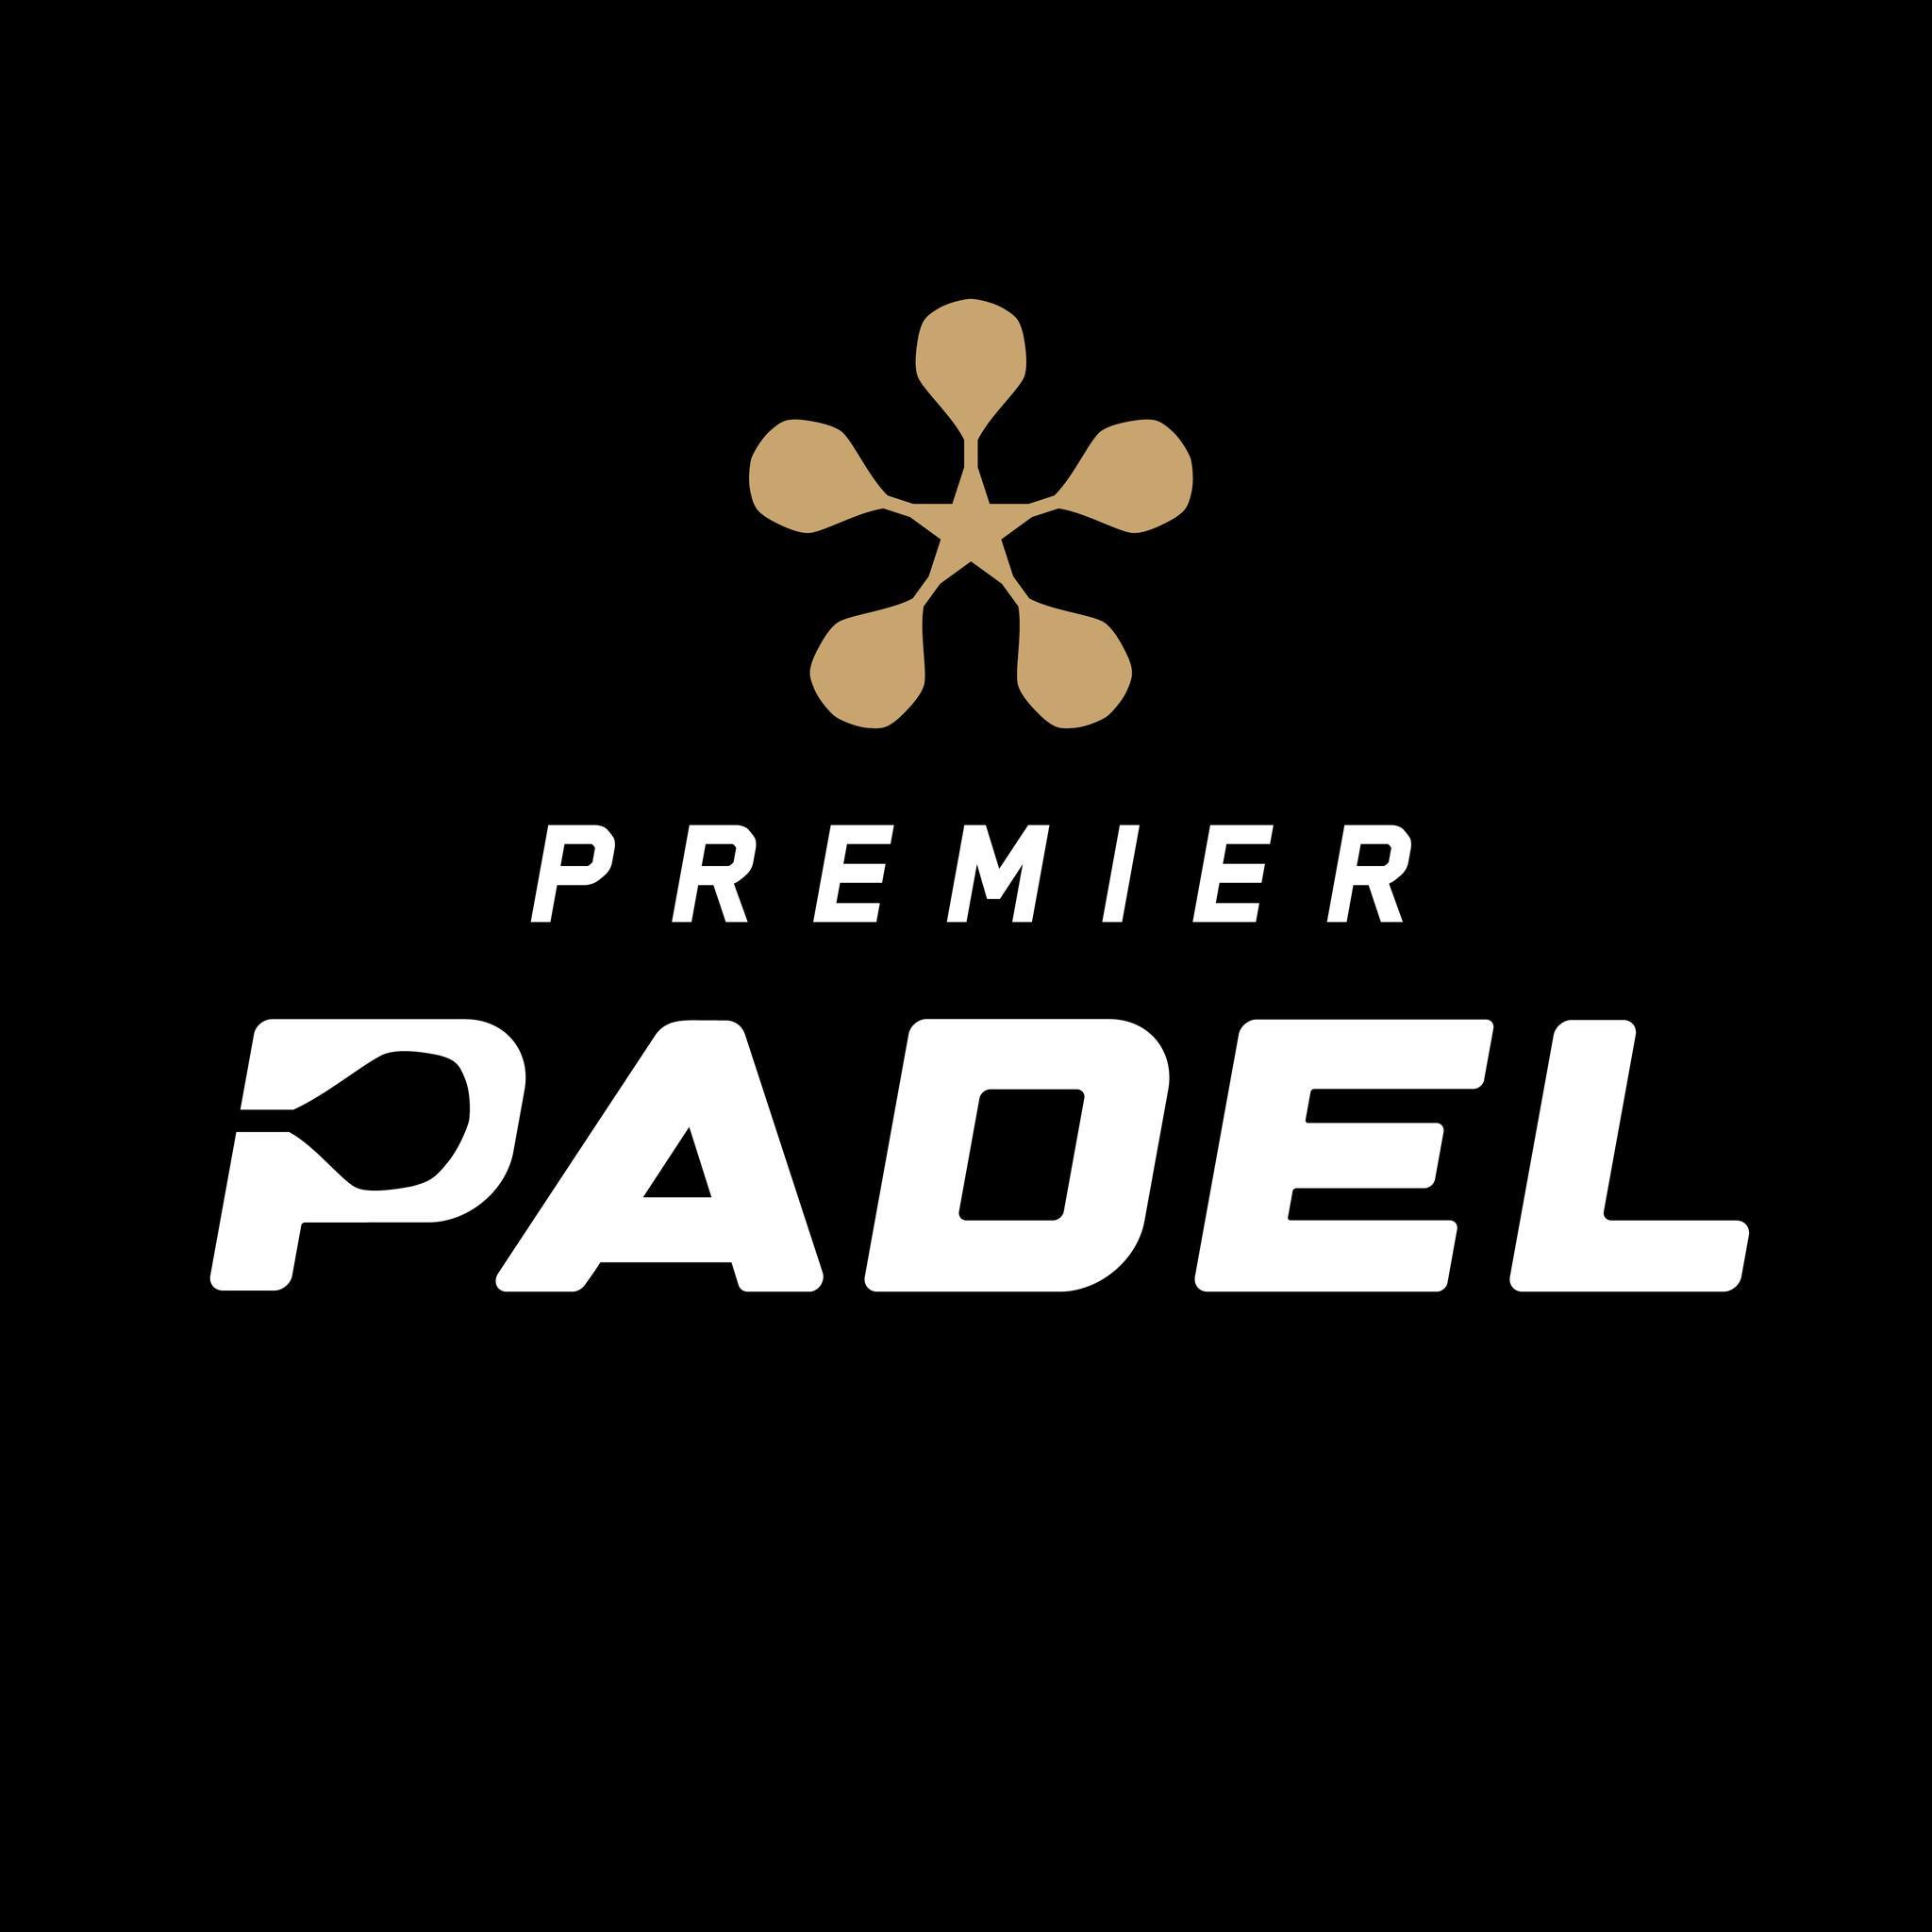 Premier Padel Logotipos